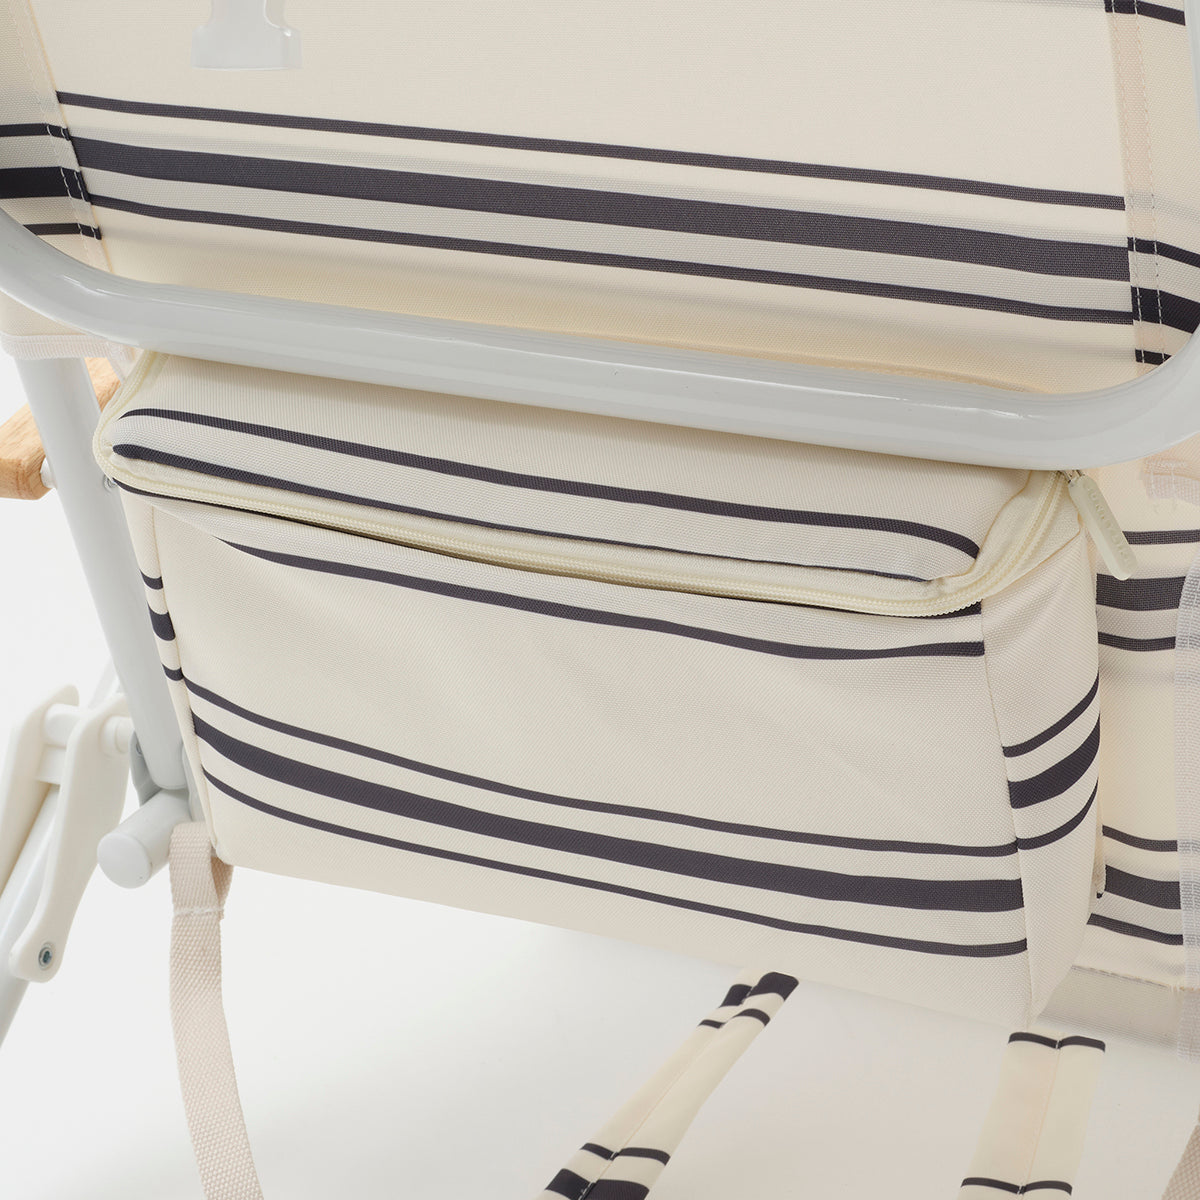 SUNNYLiFE teal color stripes print Deluxe Beach Chair Casa Fes